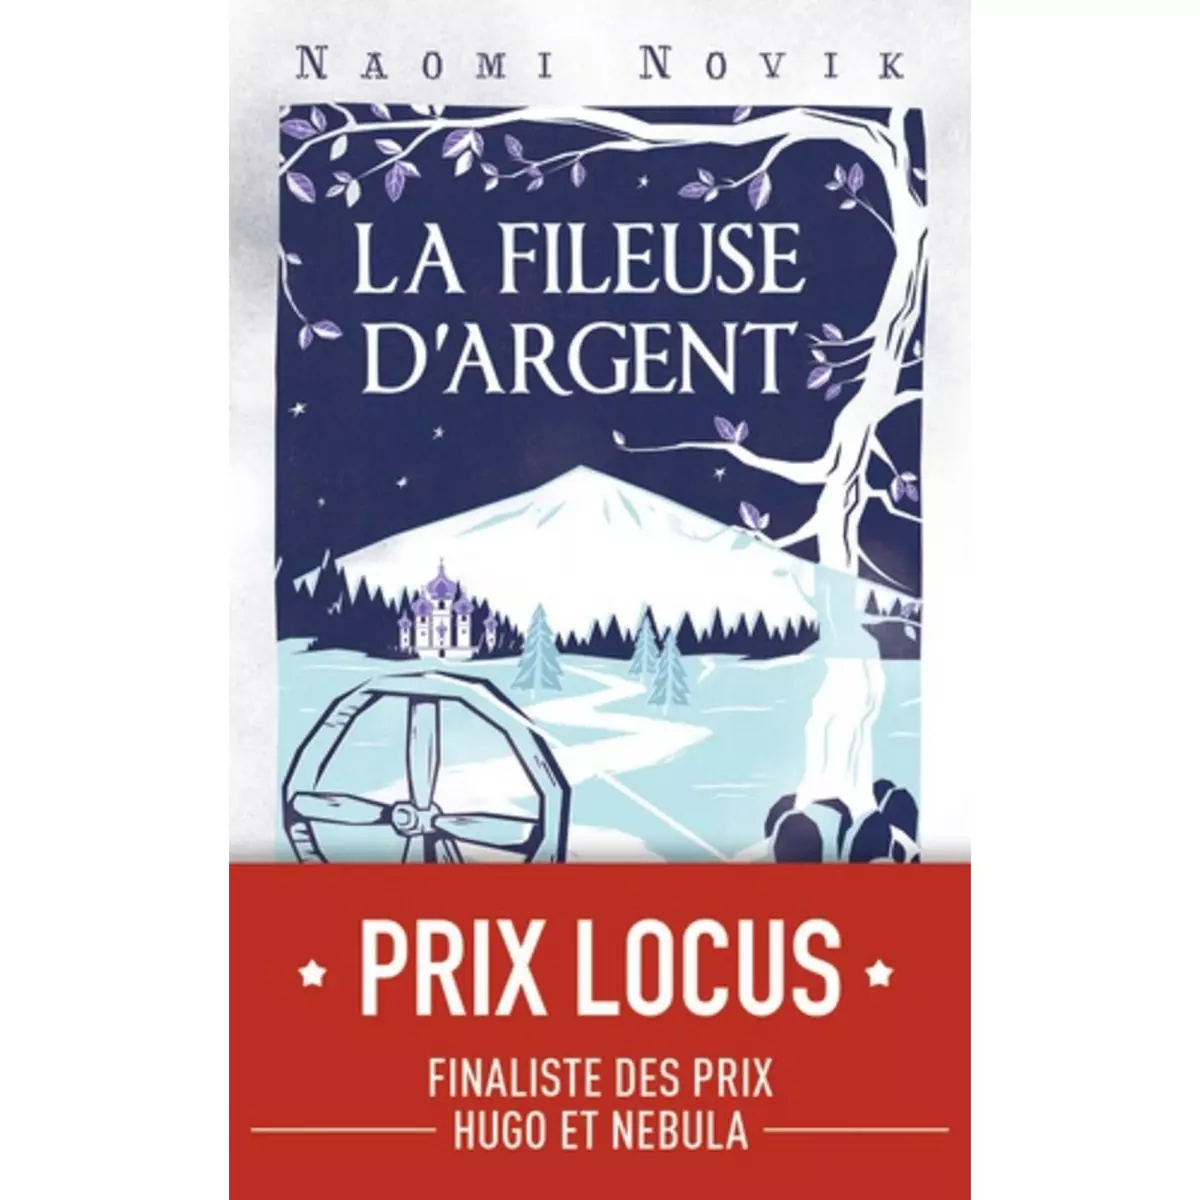  LA FILEUSE D'ARGENT, Novik Naomi